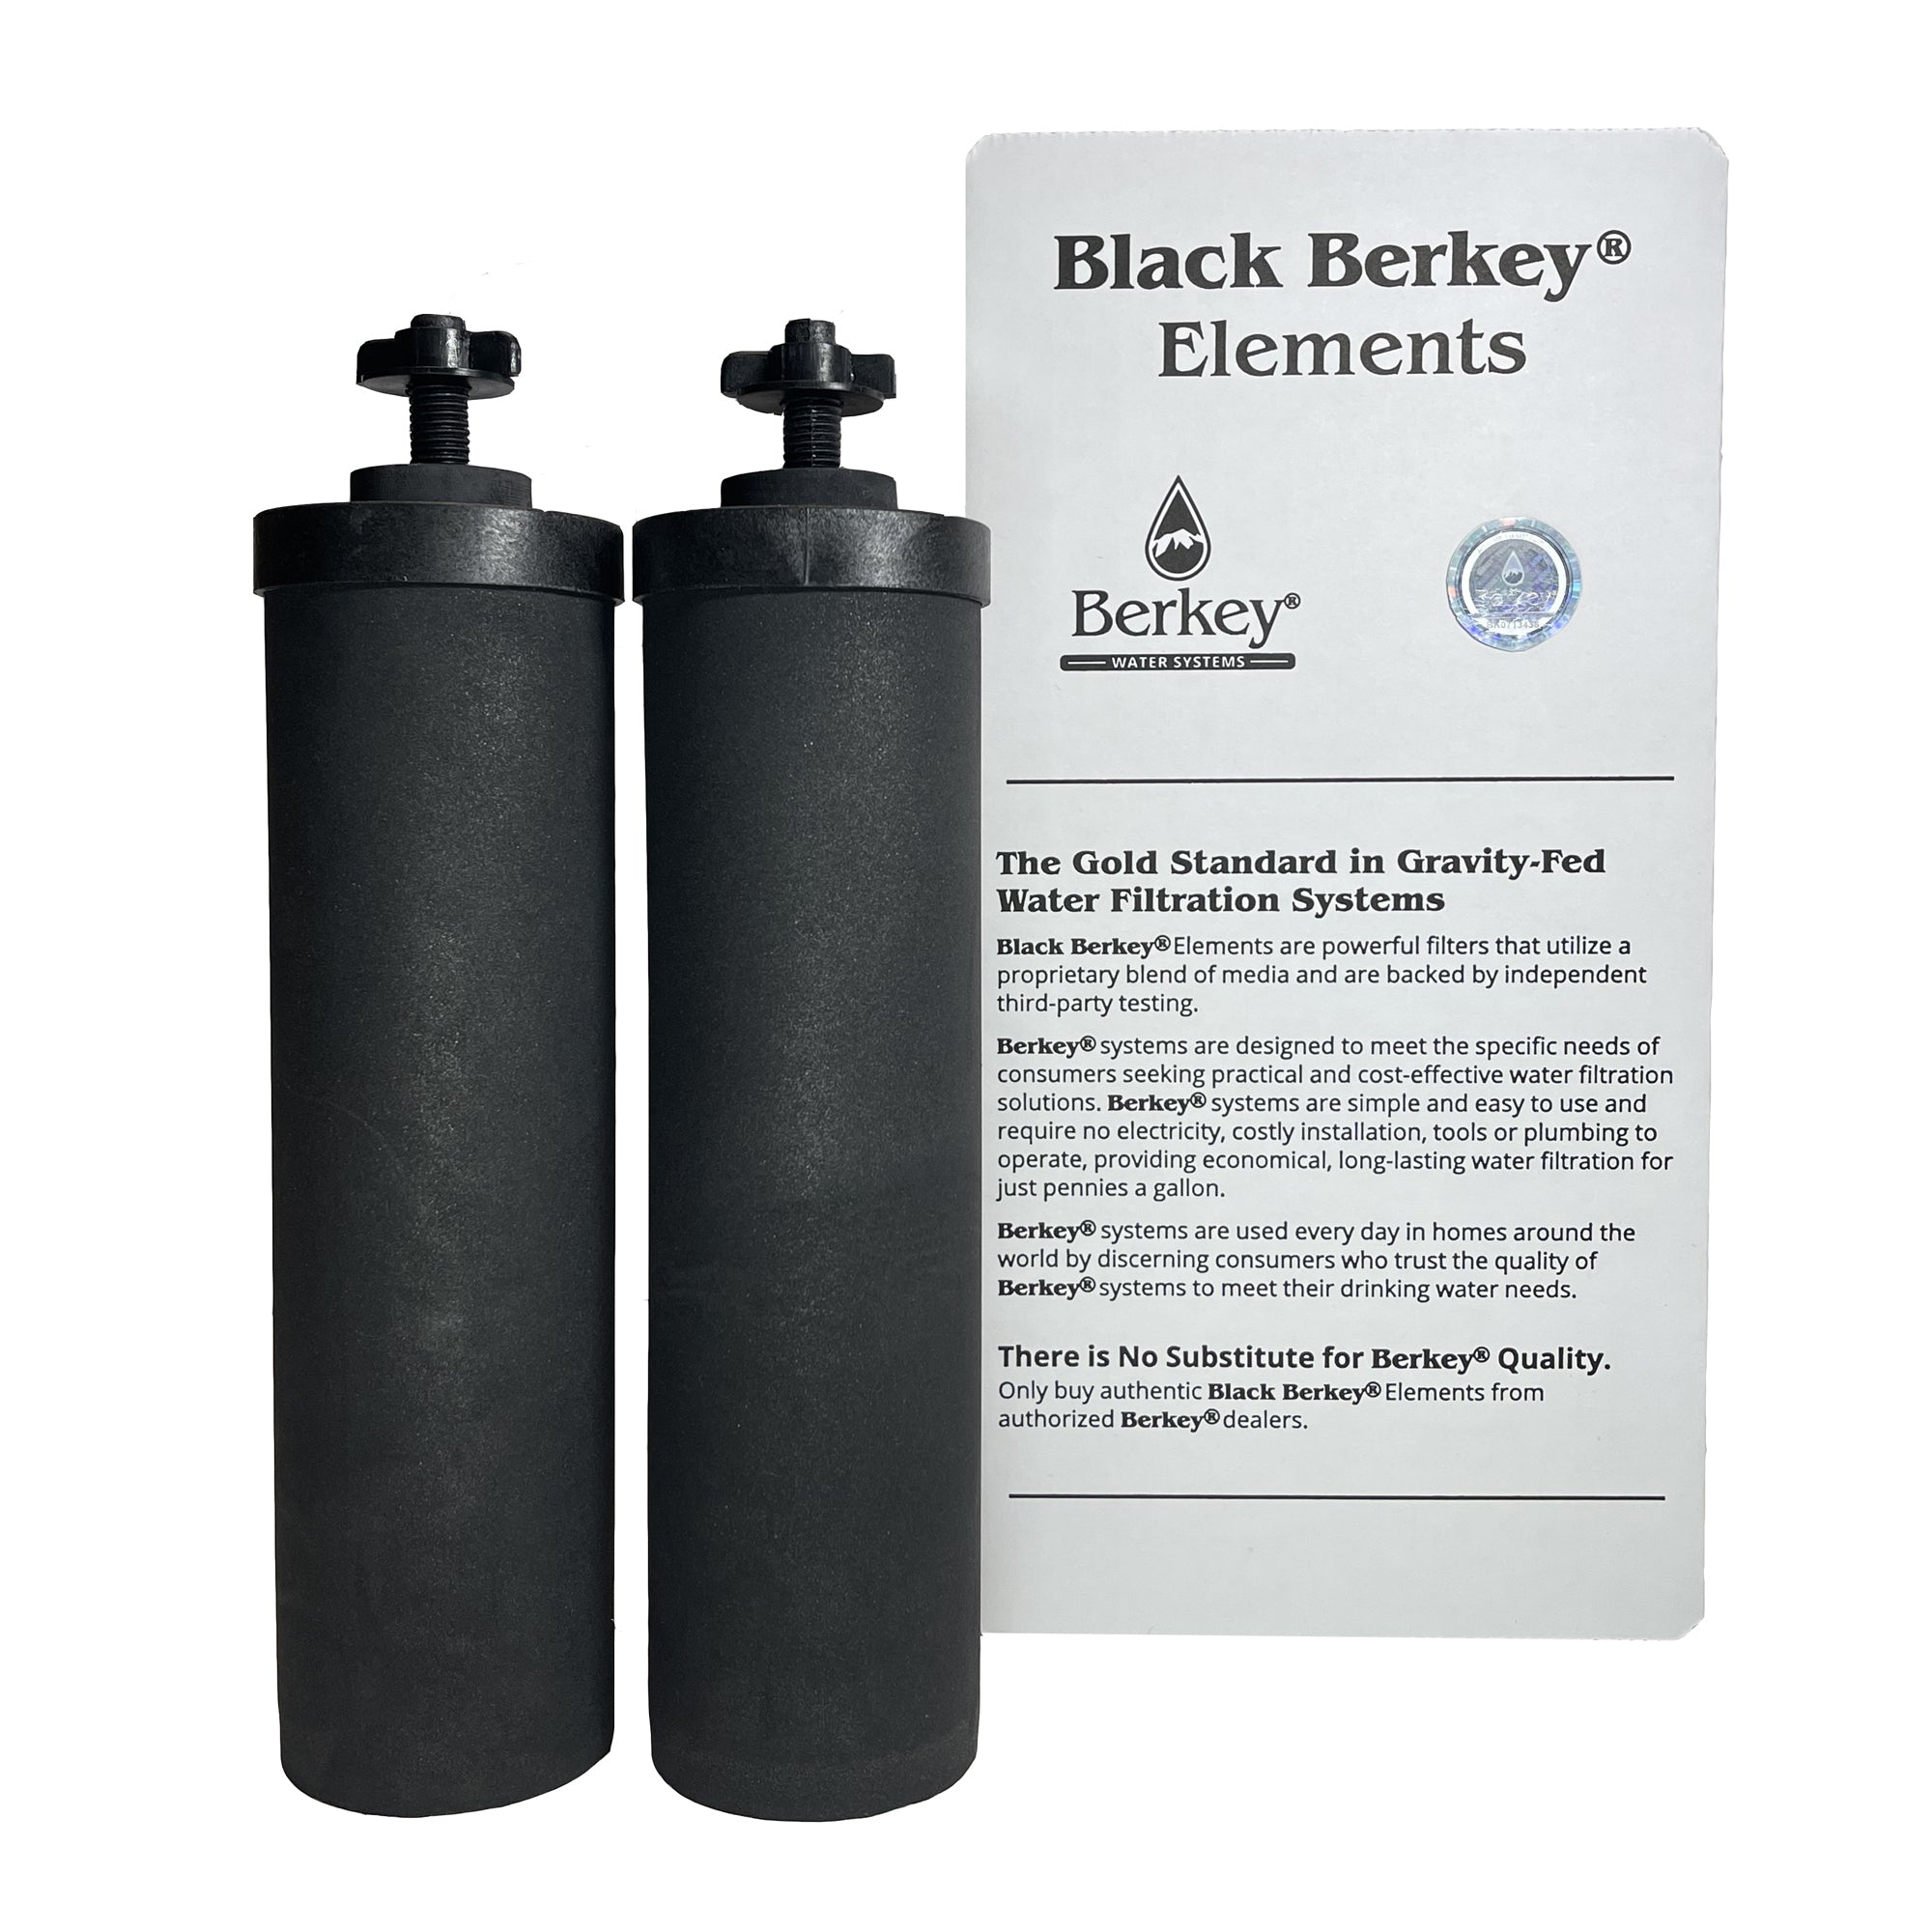 Authentic Black Berkey Elements